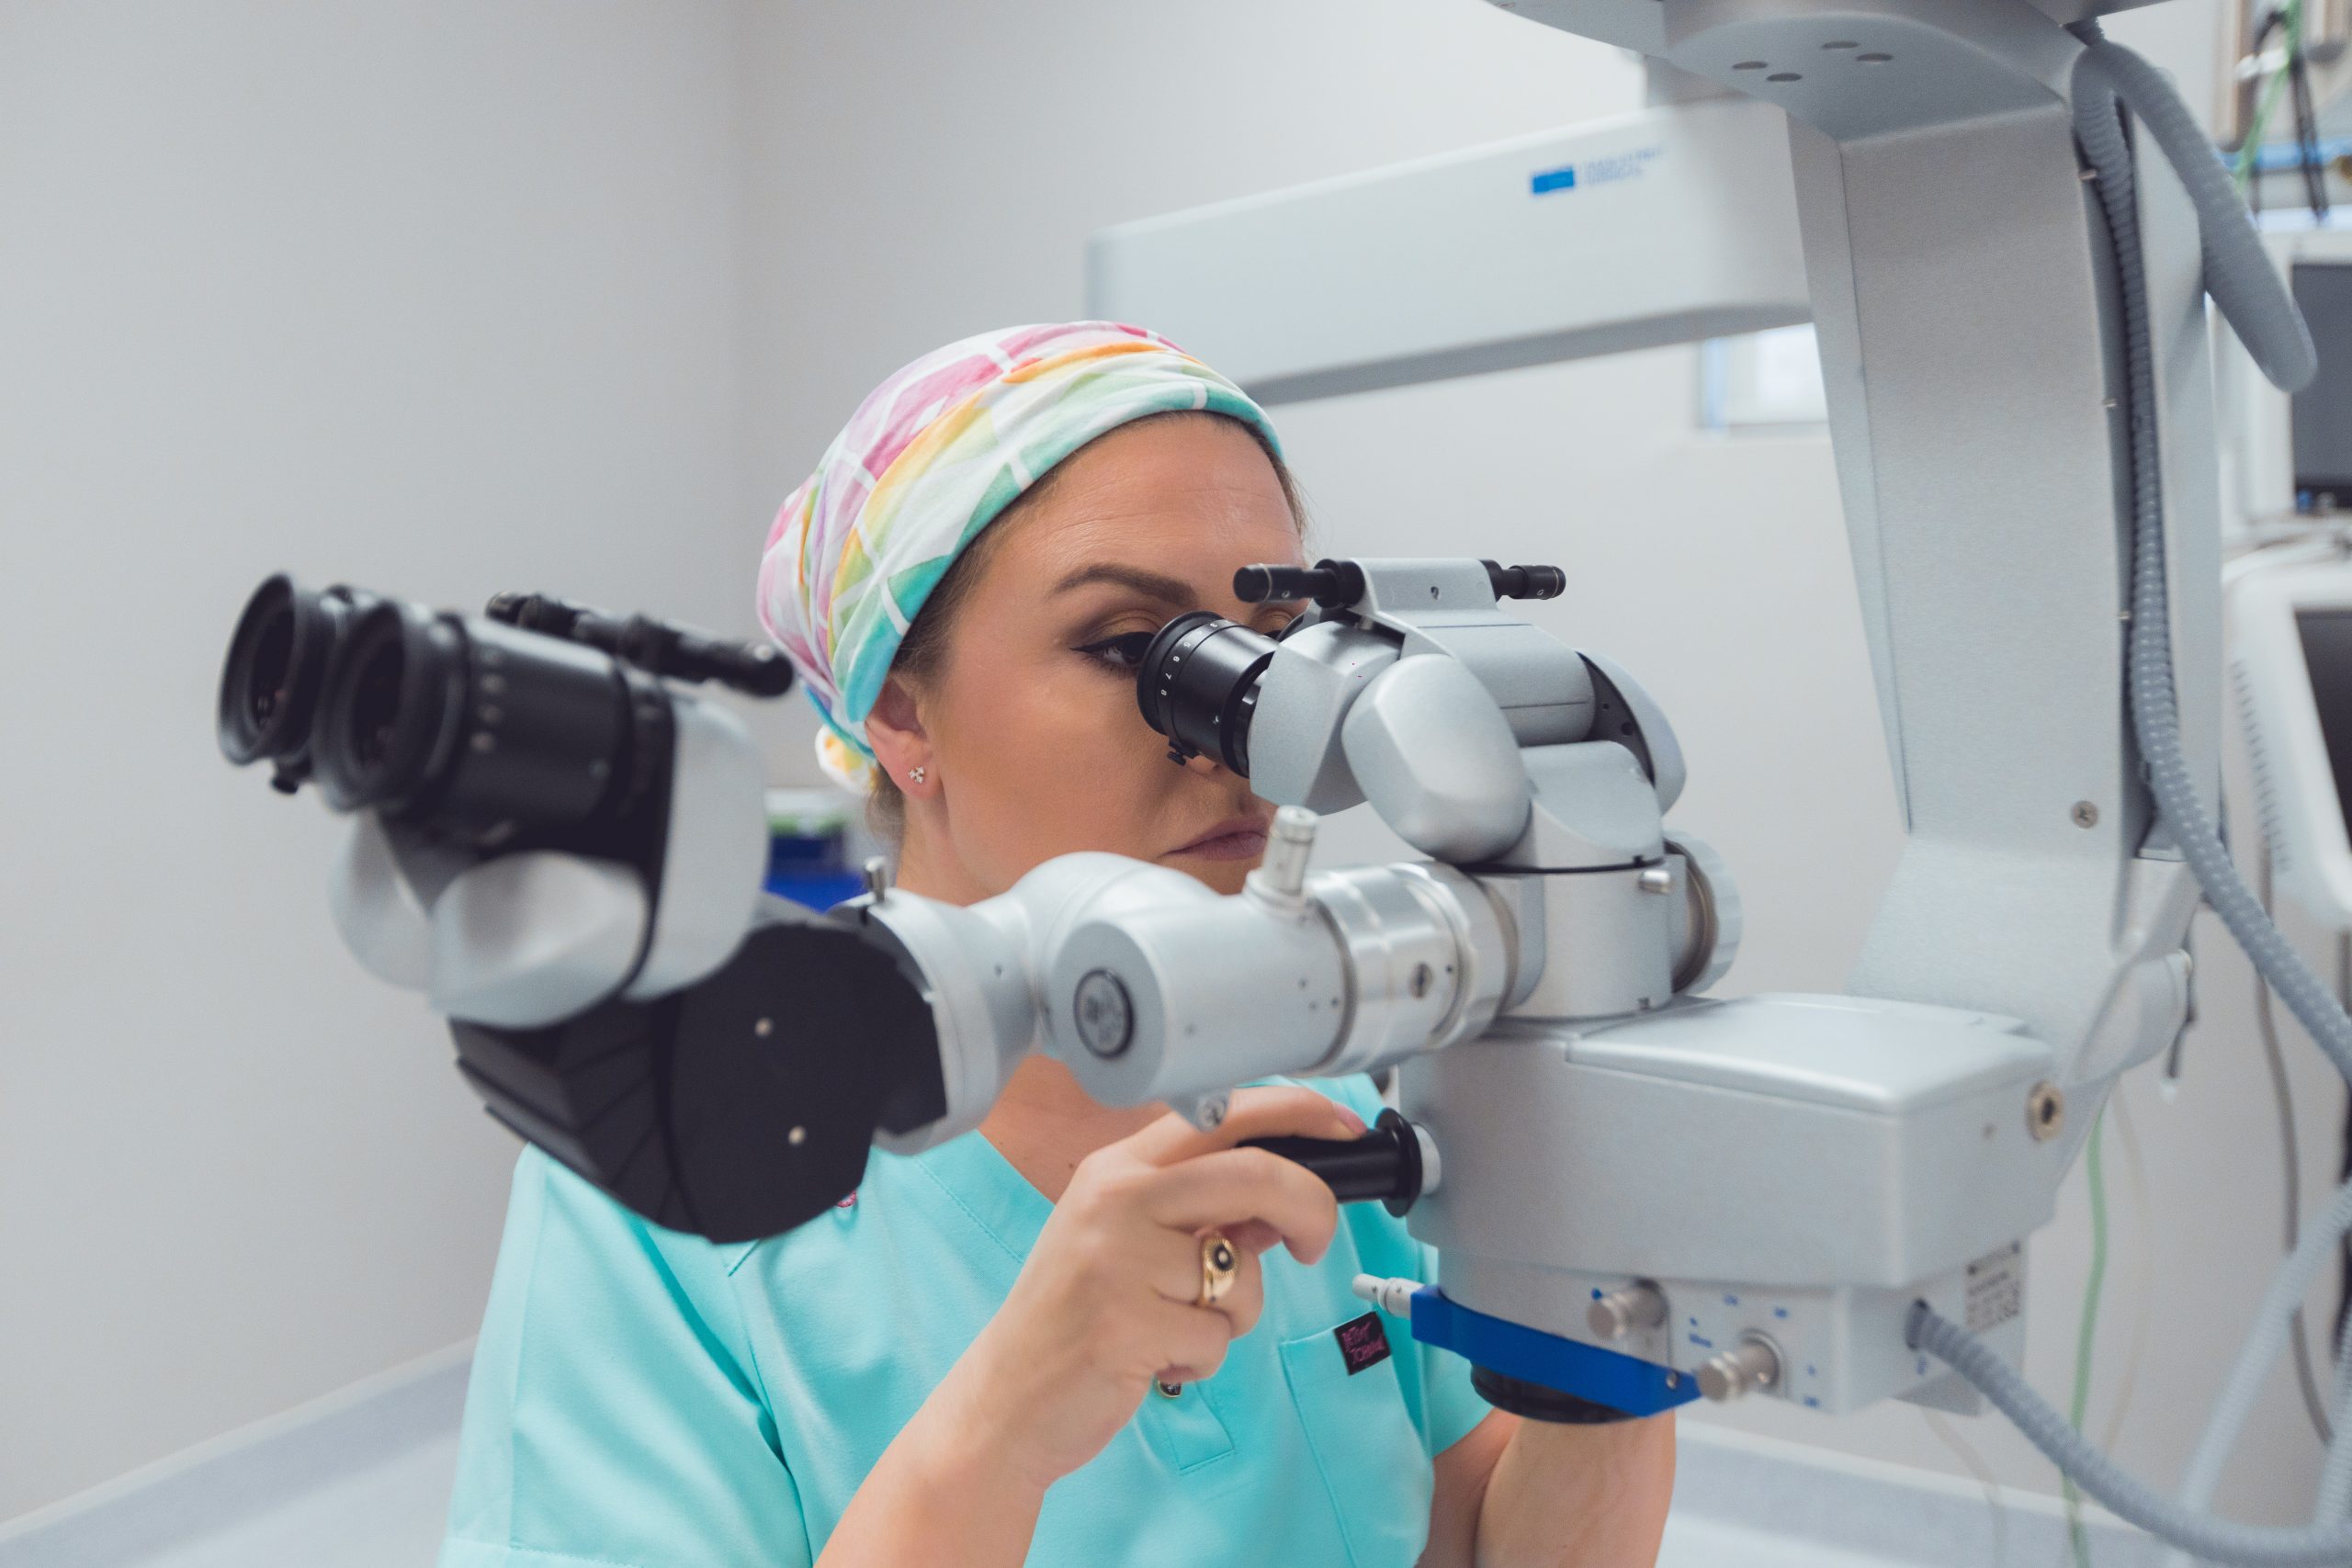 Diabetic retinopathy screening and treatment